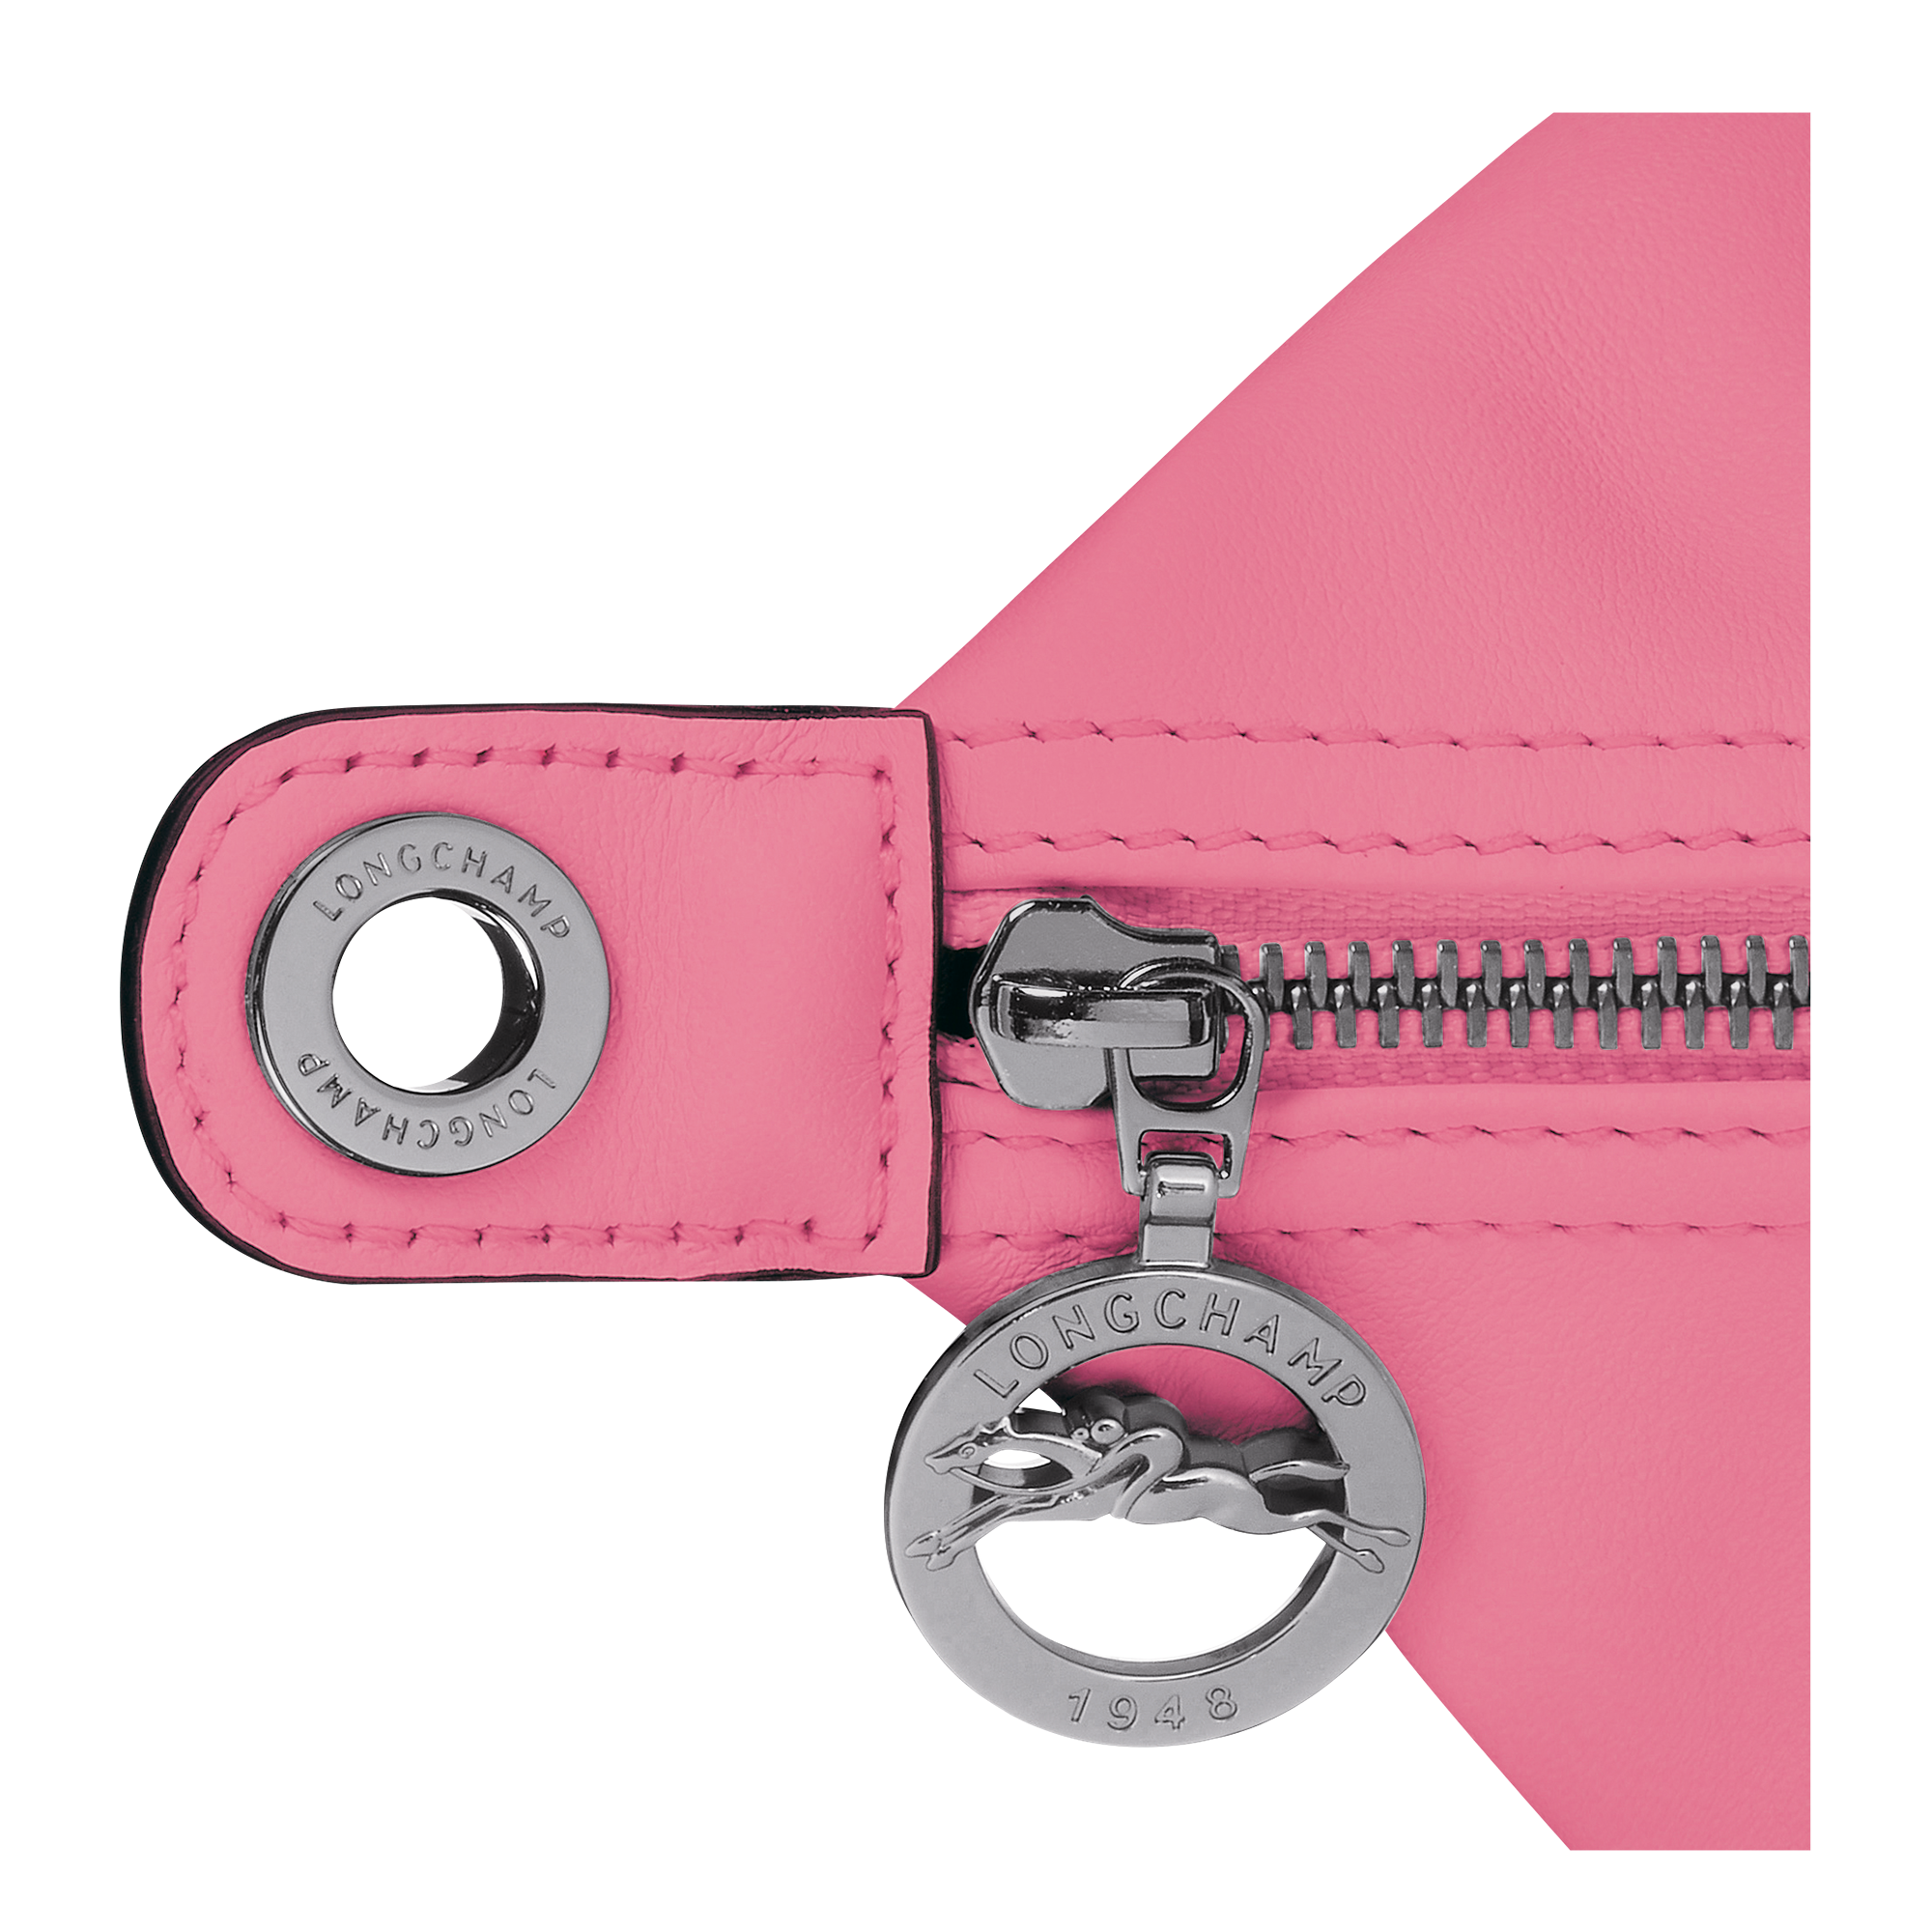 LONGCHAMP EXPANDABLE Hot Pink HOBO SHOULDER BAG Gold Hardware New &  Beautiful!